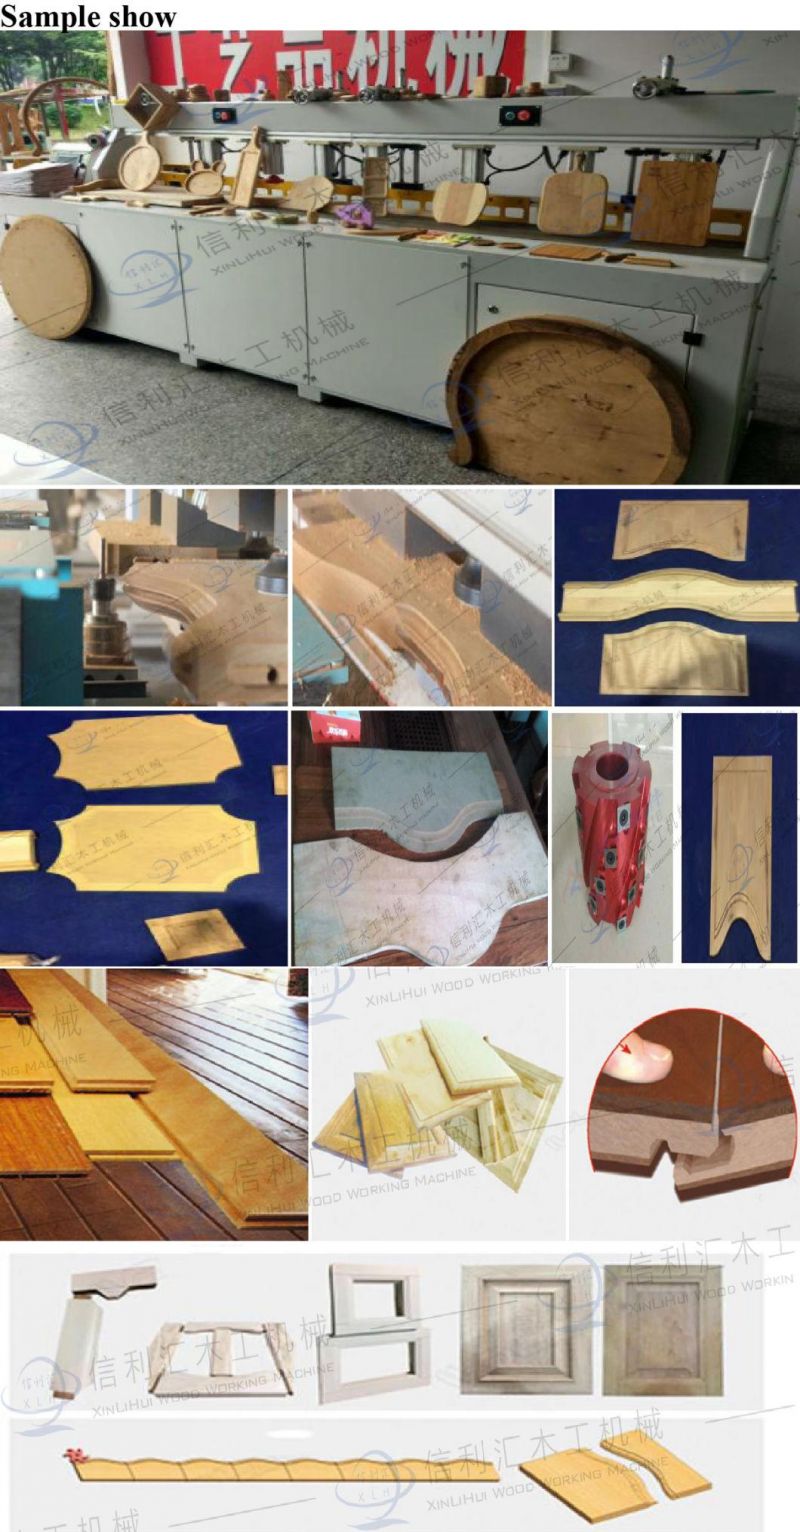 Reciprocating Type Wood Edge Milling Machine/Multi-Functional Straight Line Milling Machine /Multi-Functional Wood Trim Machine